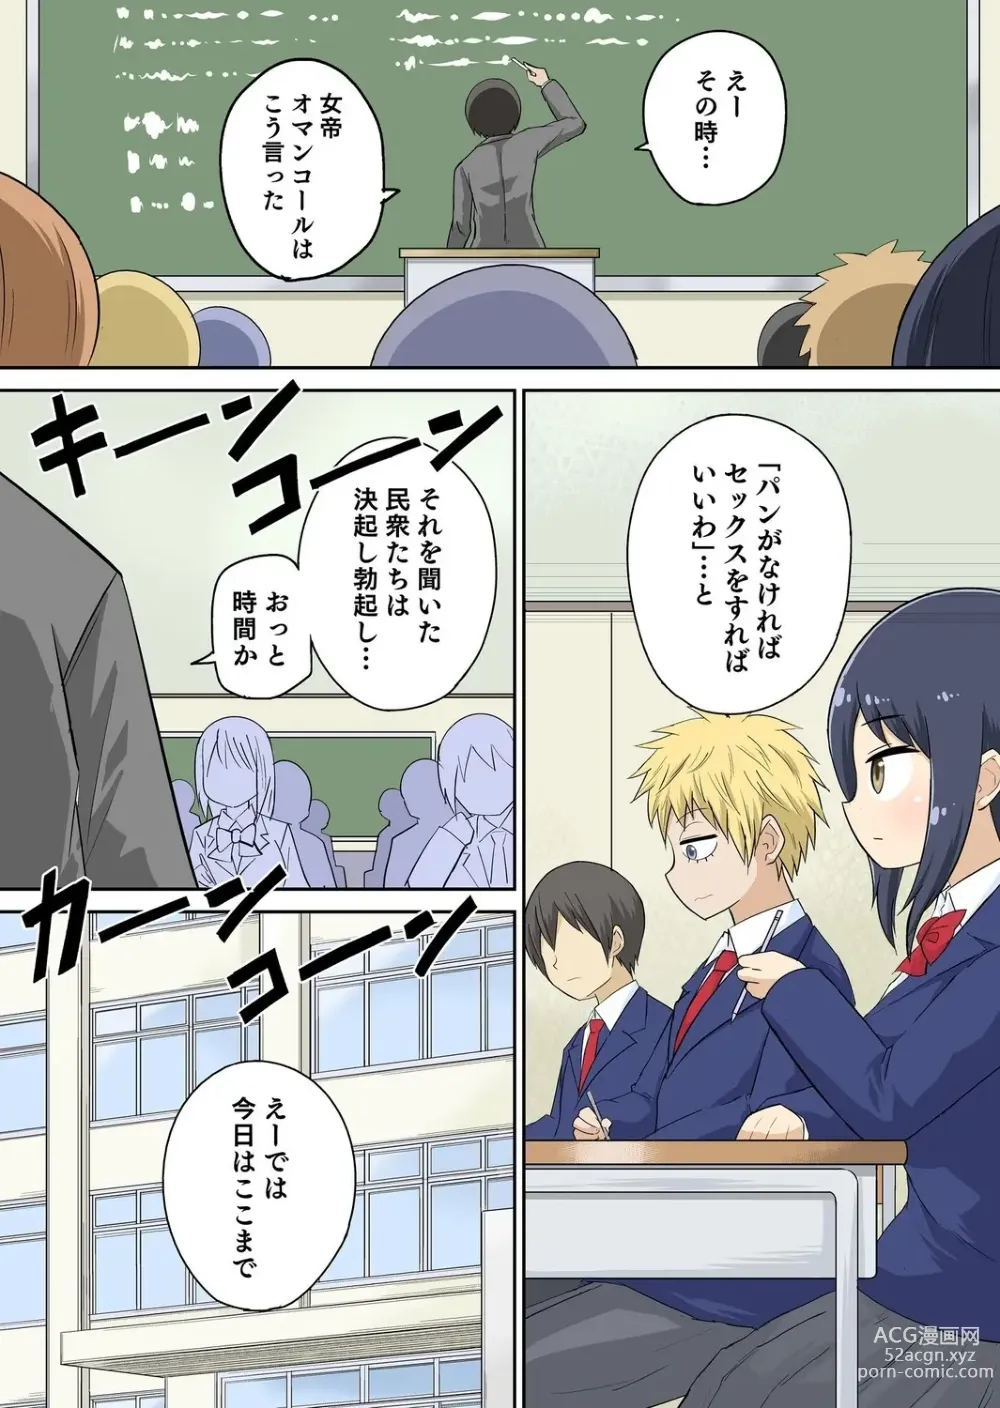 Page 81 of manga Classmate to Ecchi Jugyou Season two Chapter1~Chapter4